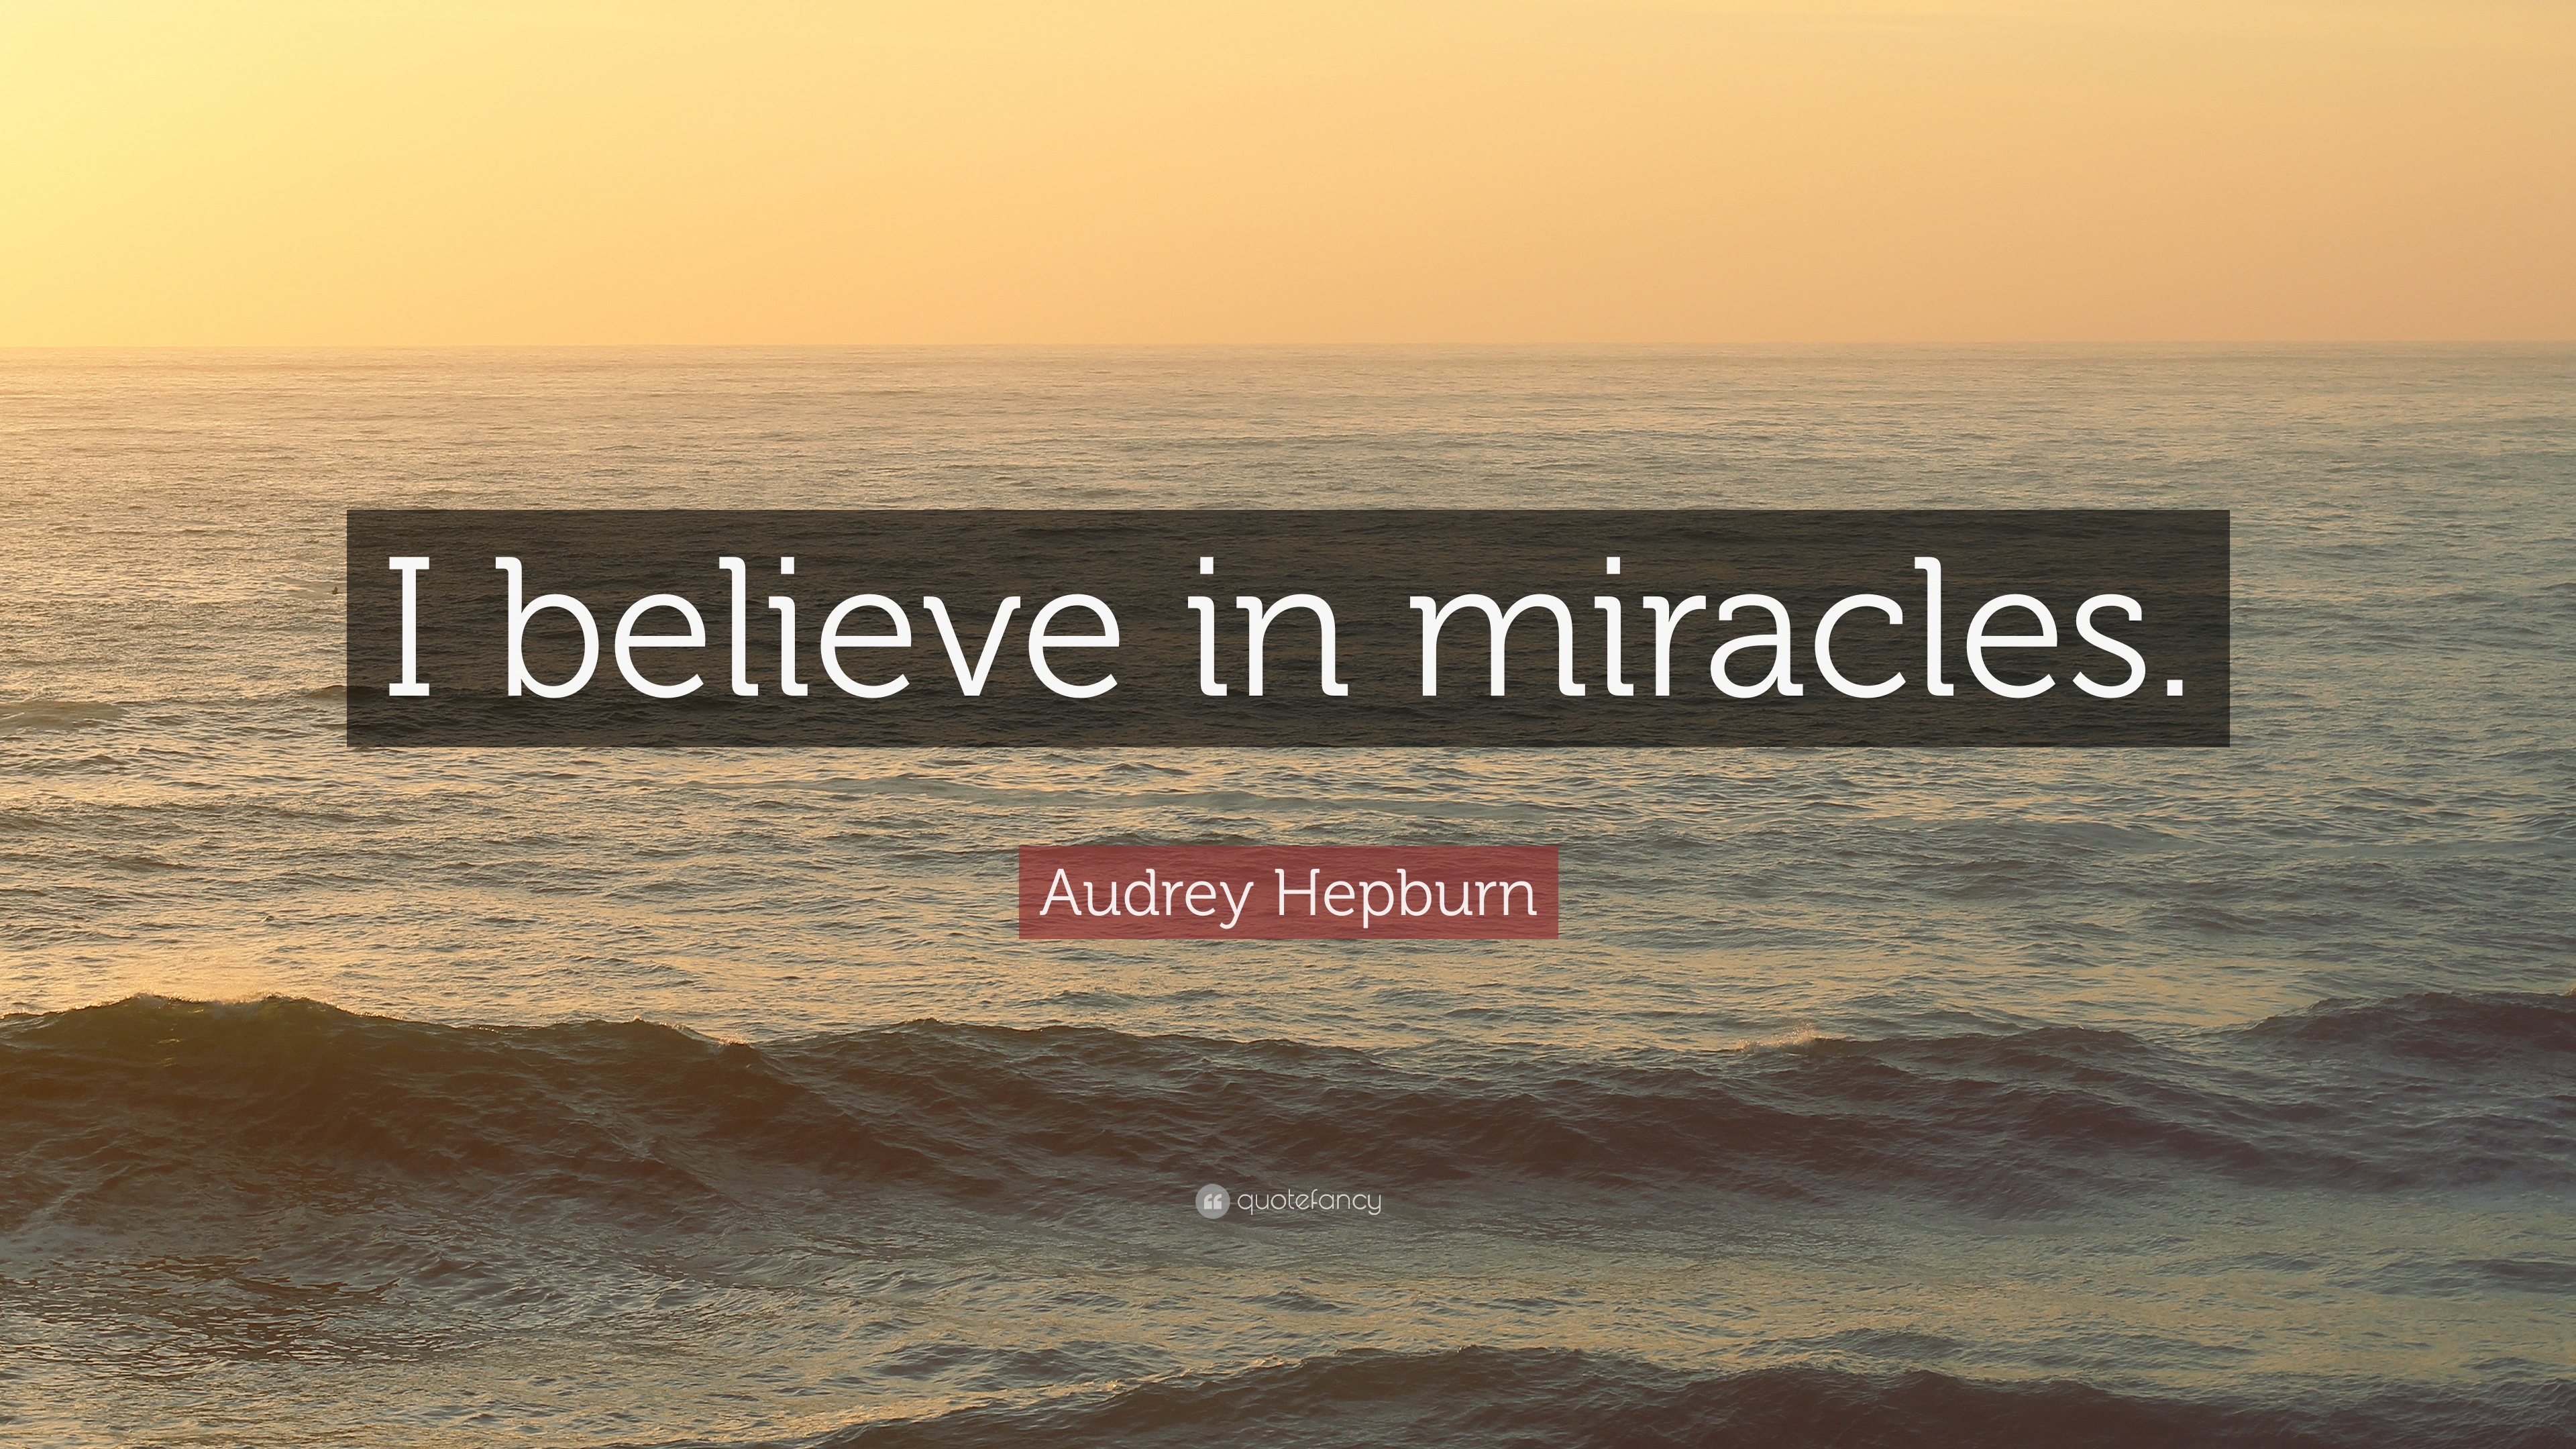 Audrey Hepburn Quote - Road Cormac Mccarthy Quotes - HD Wallpaper 